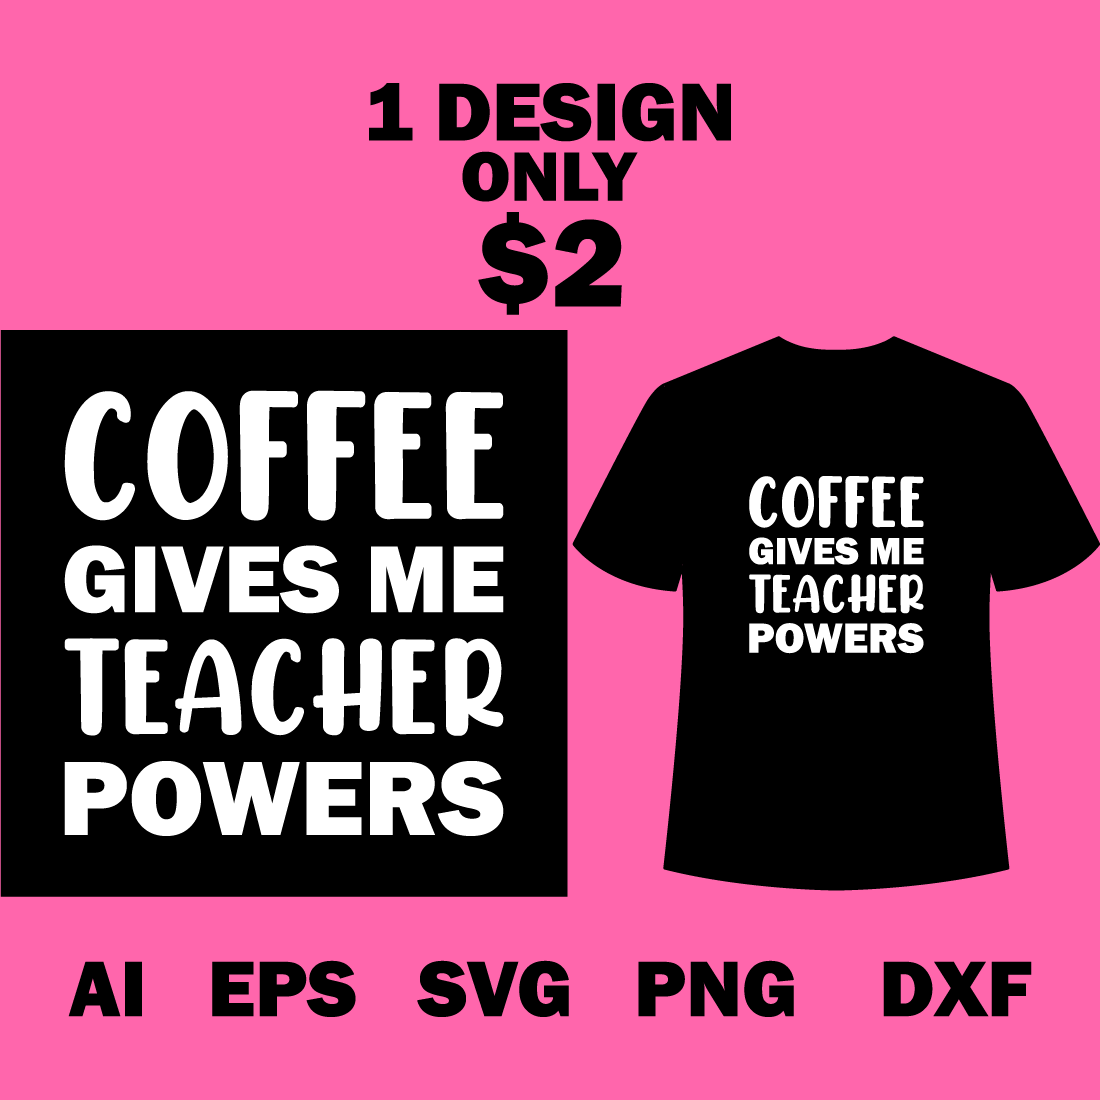 Coffee Gives Me Teacher Power T-shirt Design facebook image.